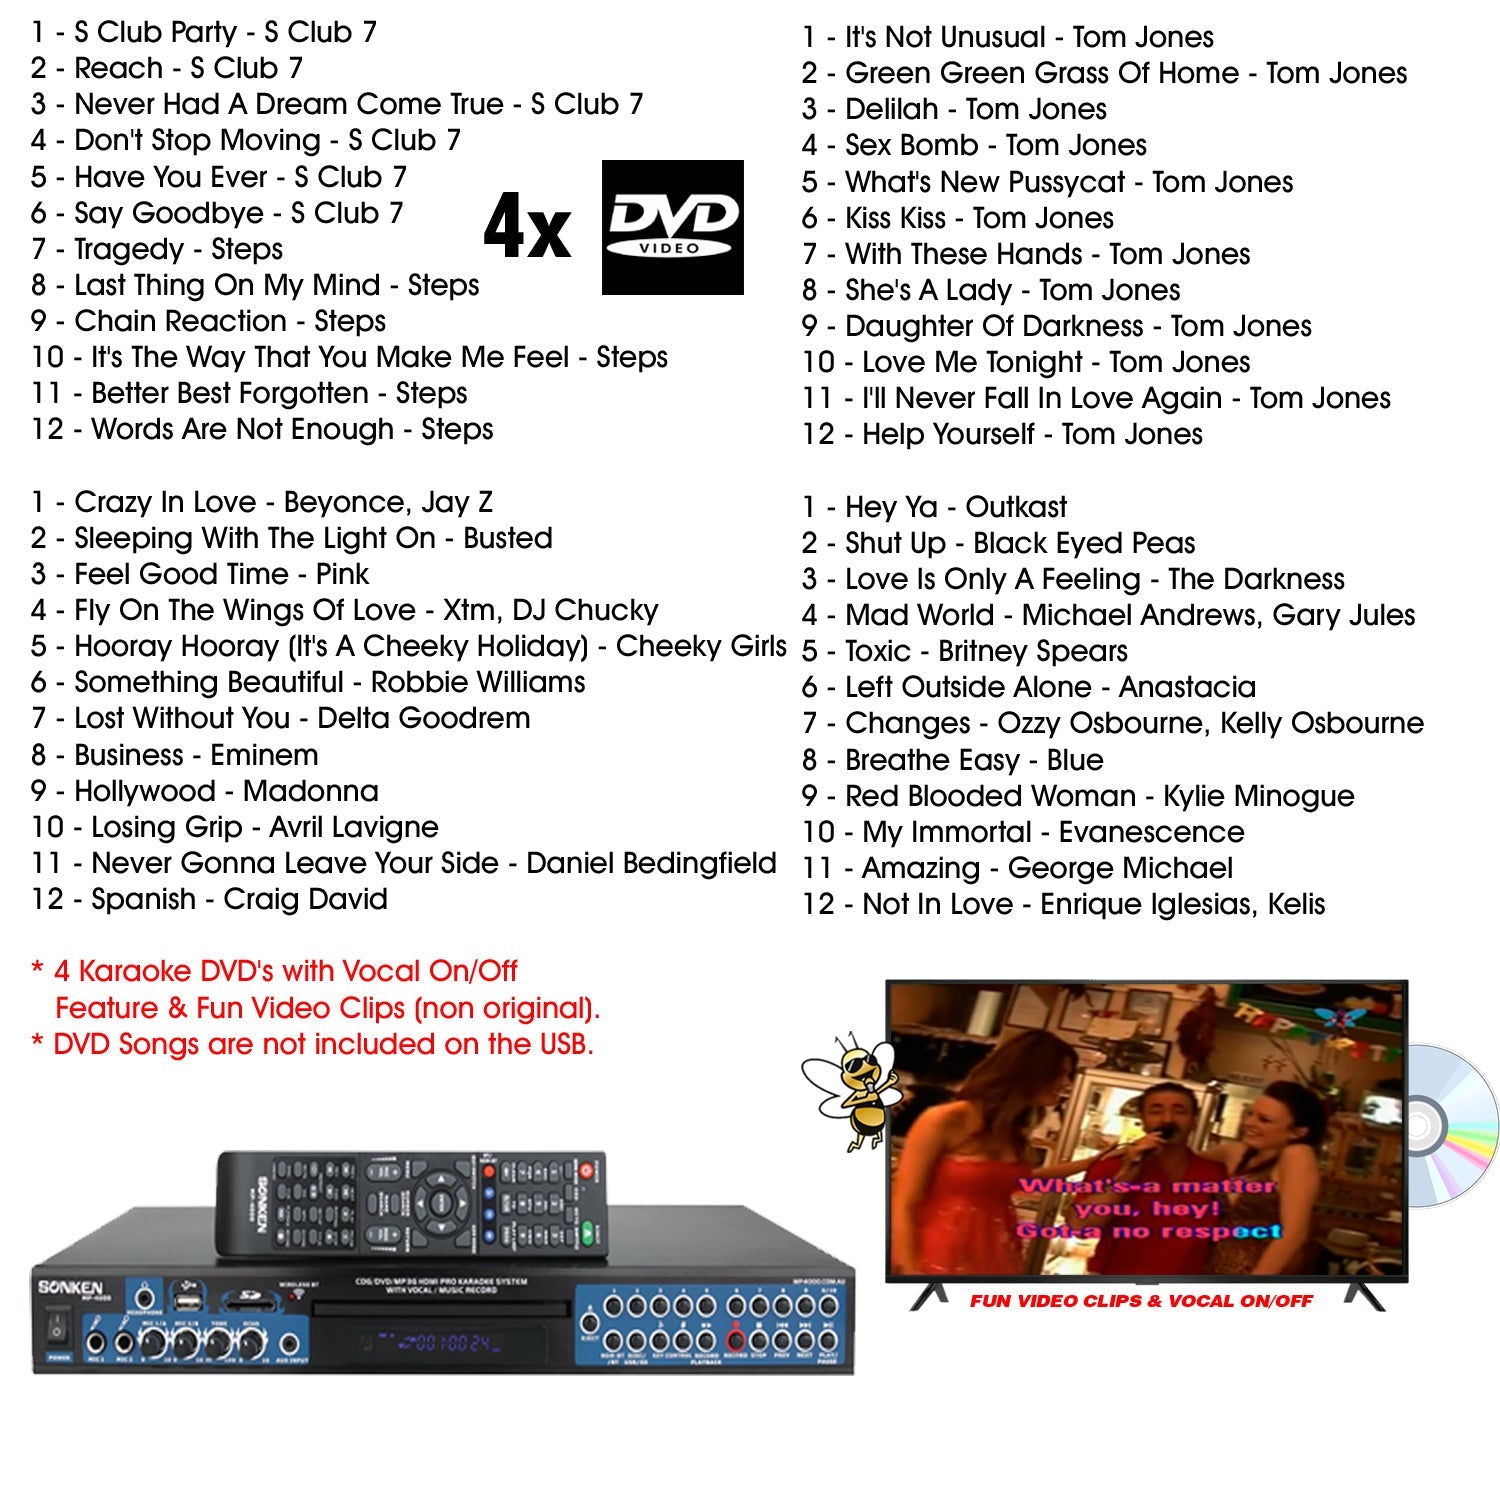 Sonken MP4000 & KBEATBOX CBX-150G DJ BUSTER PACK {with 1757 Songs} + 2 Wireless Microphones - Karaoke Home Entertainment